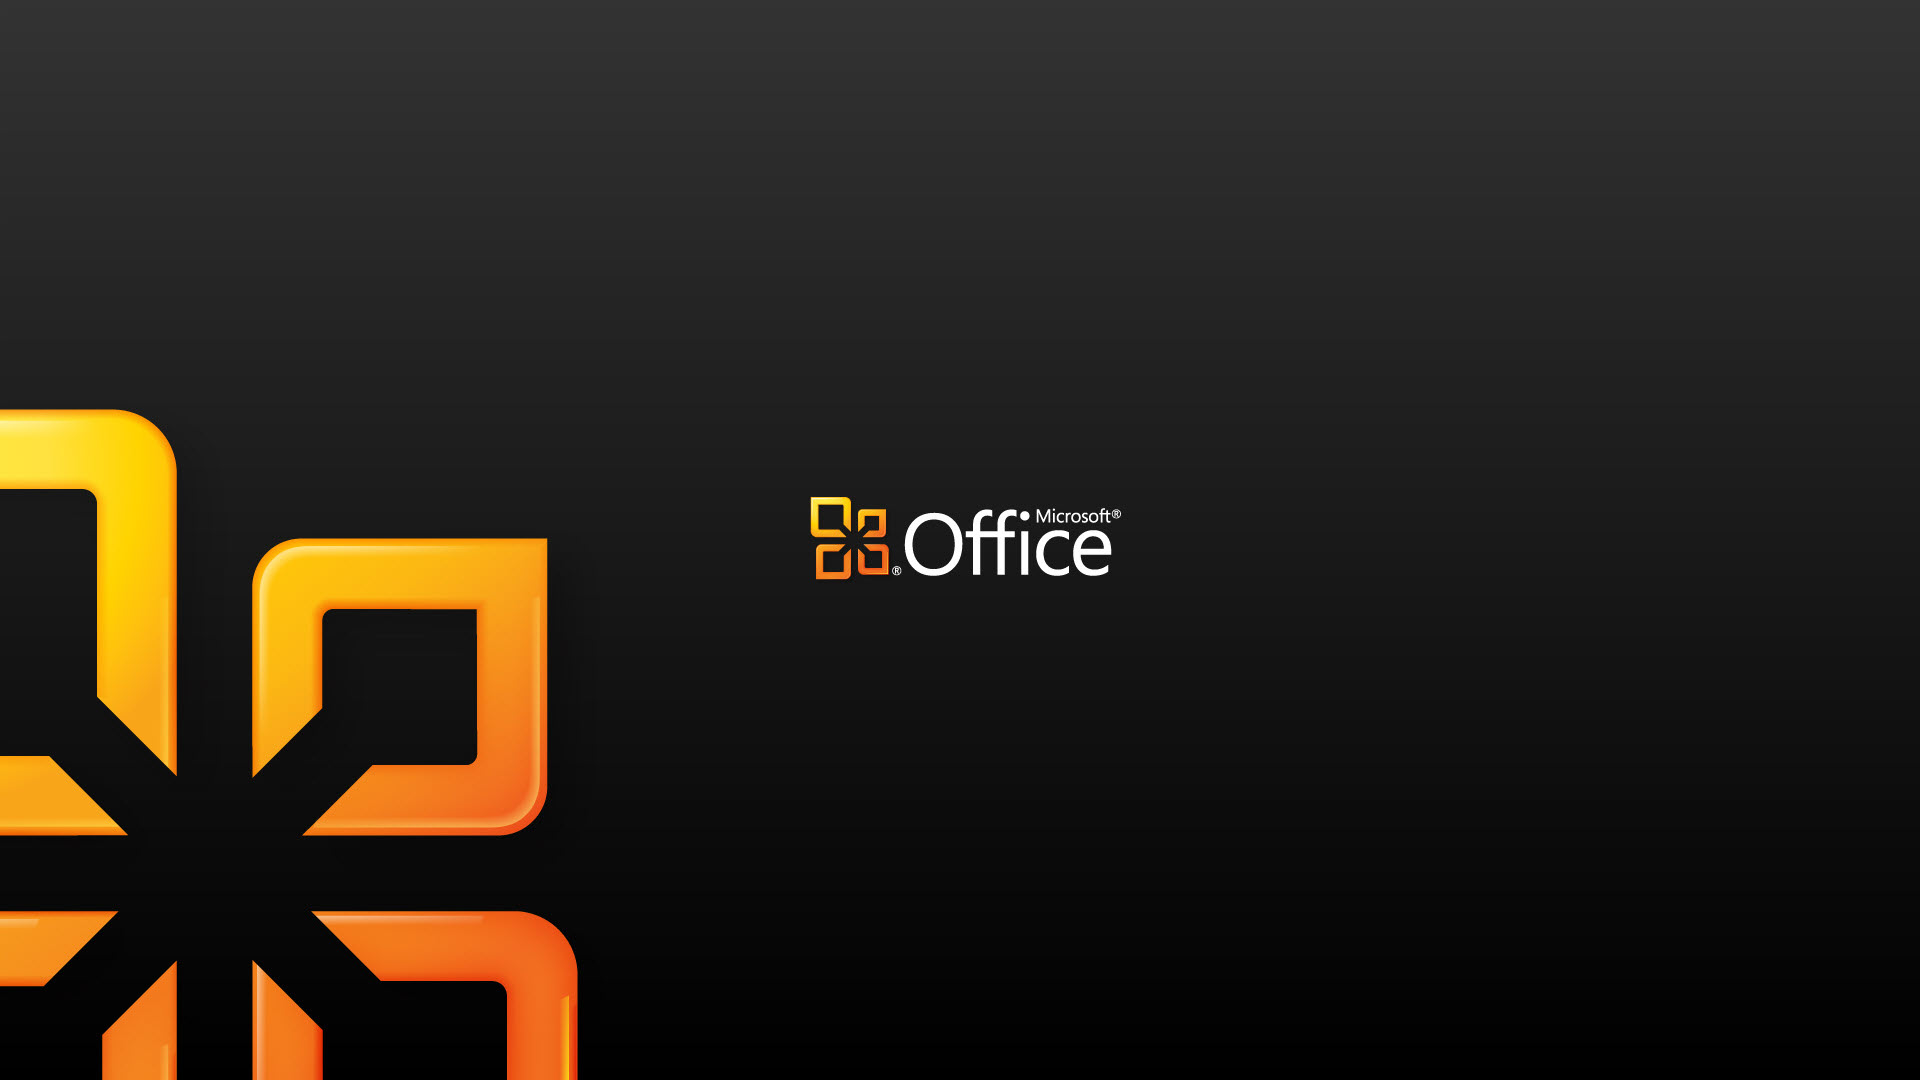 Microsoft Office Wallpaper loopelecom